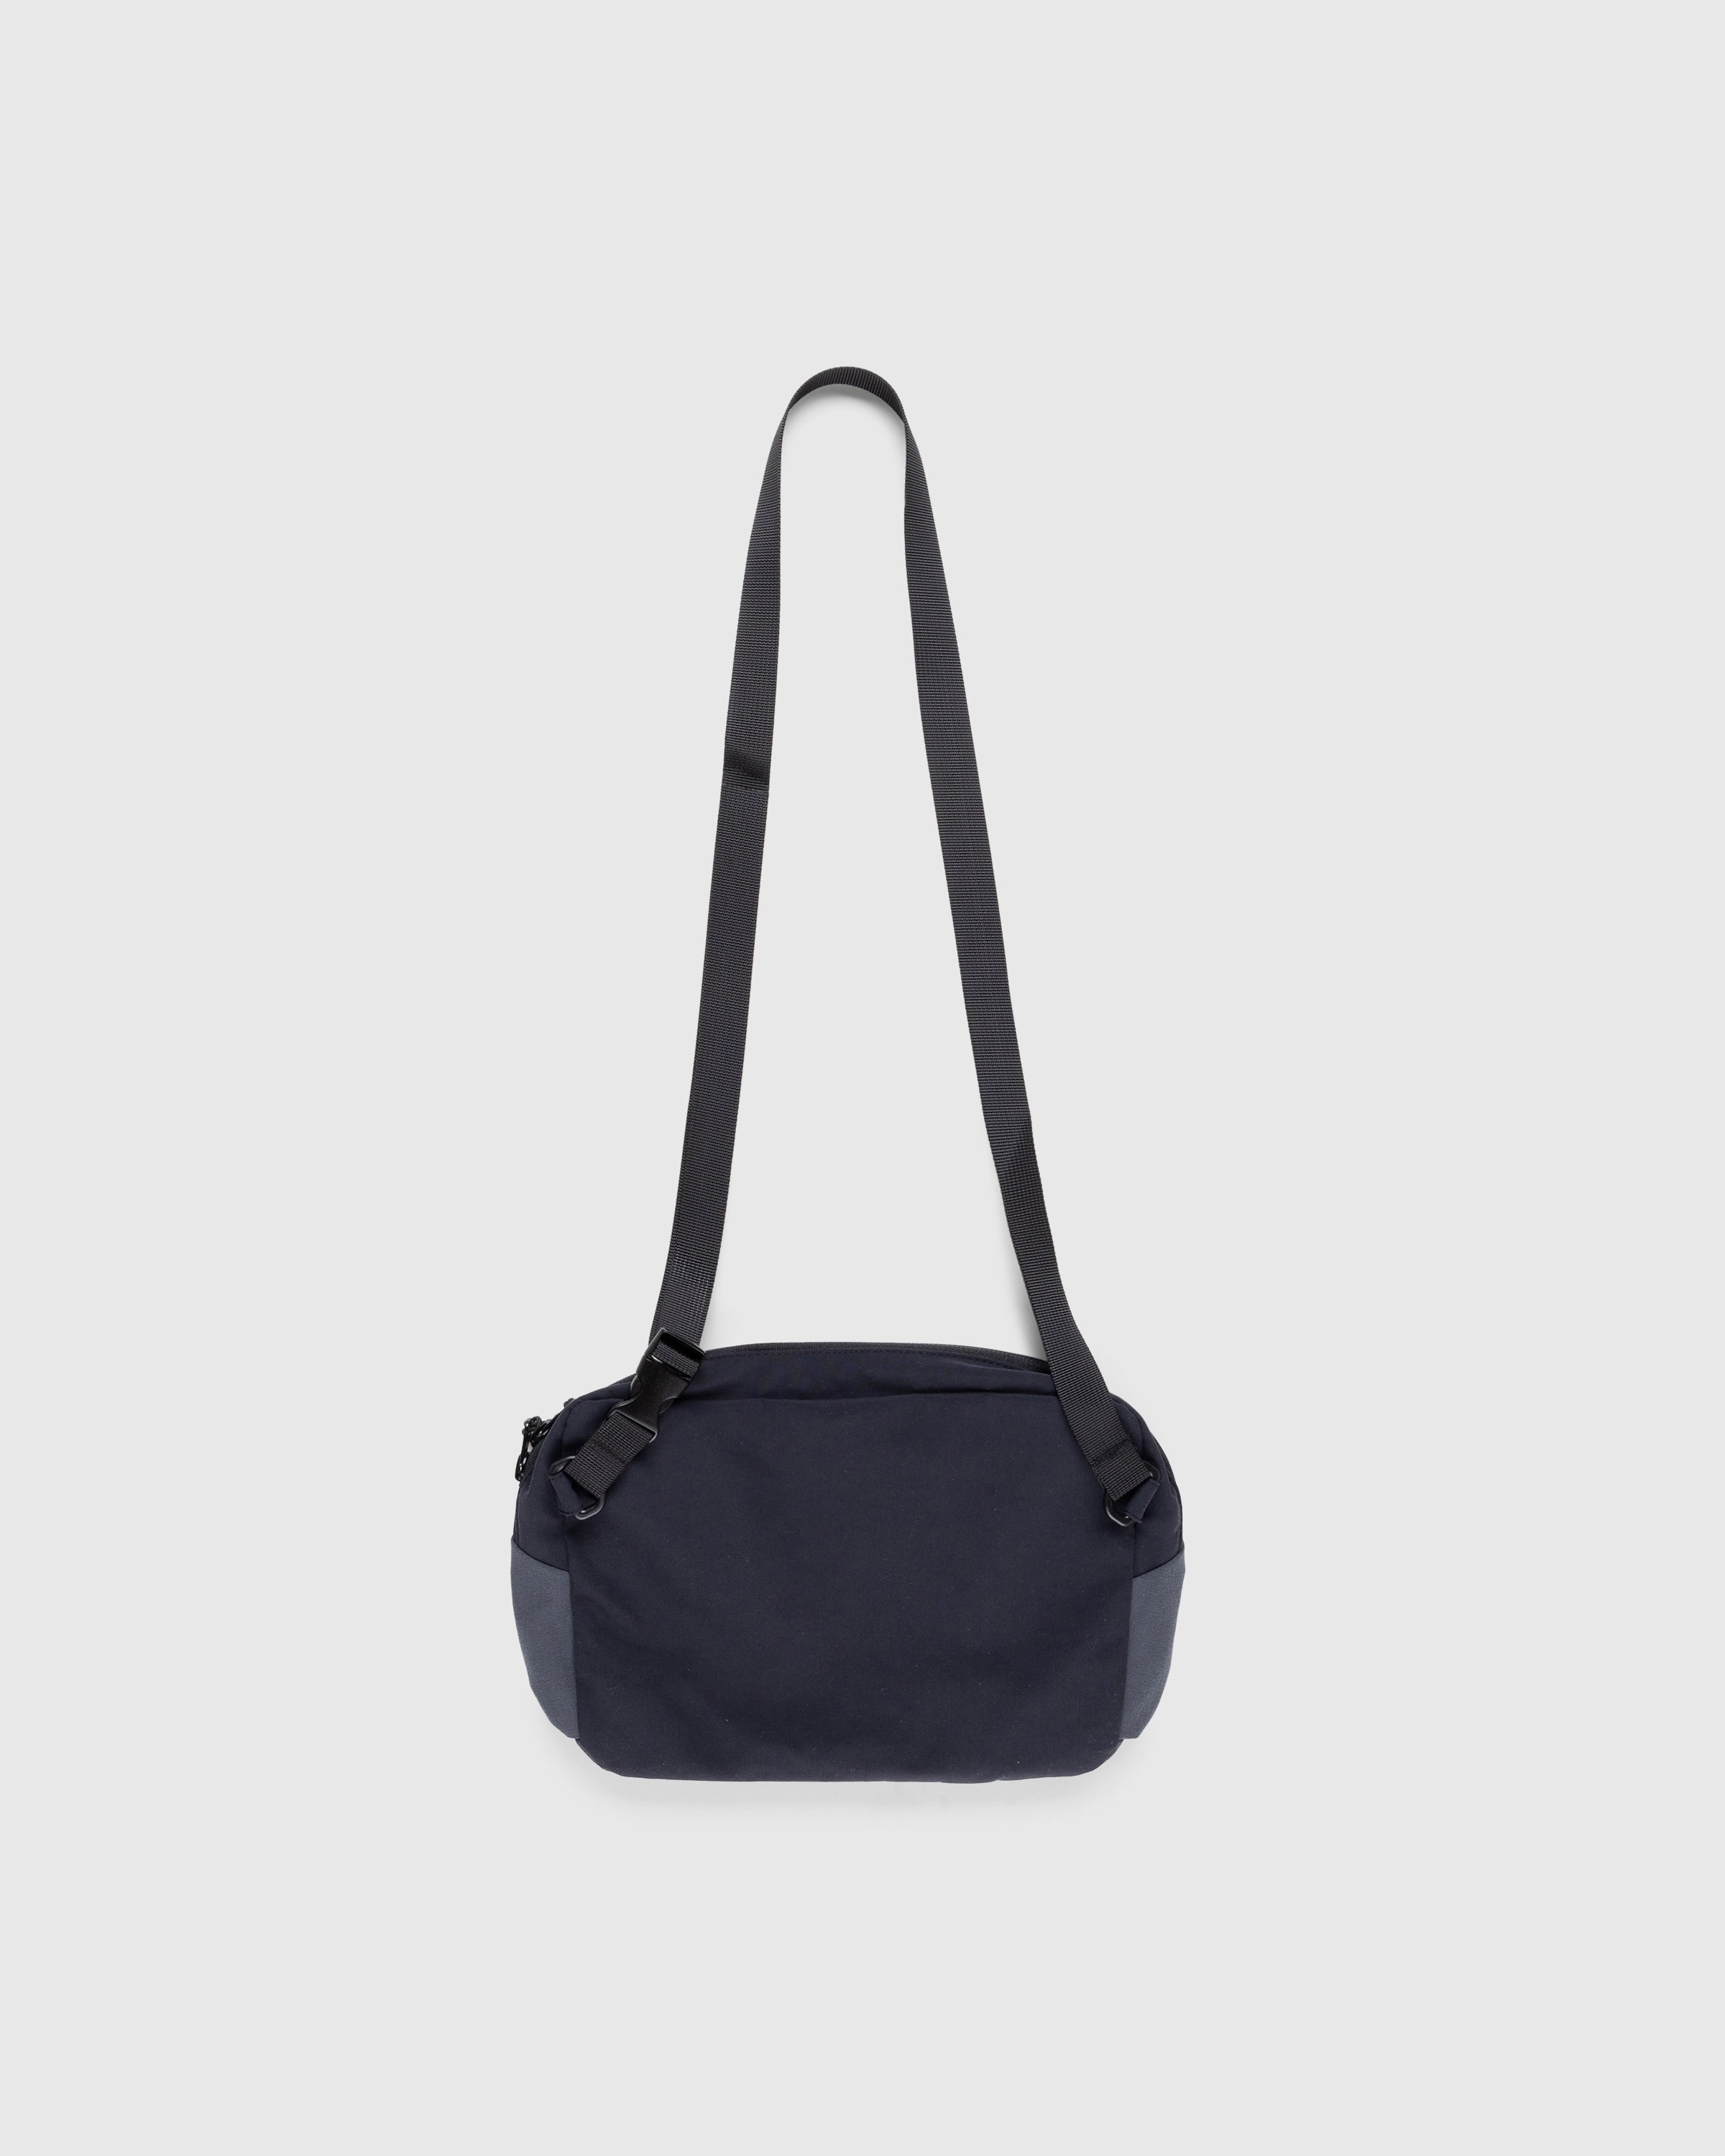 Highsnobiety HS05 - 3 Layer Nylon Side Bag Black - Accessories - Black - Image 2